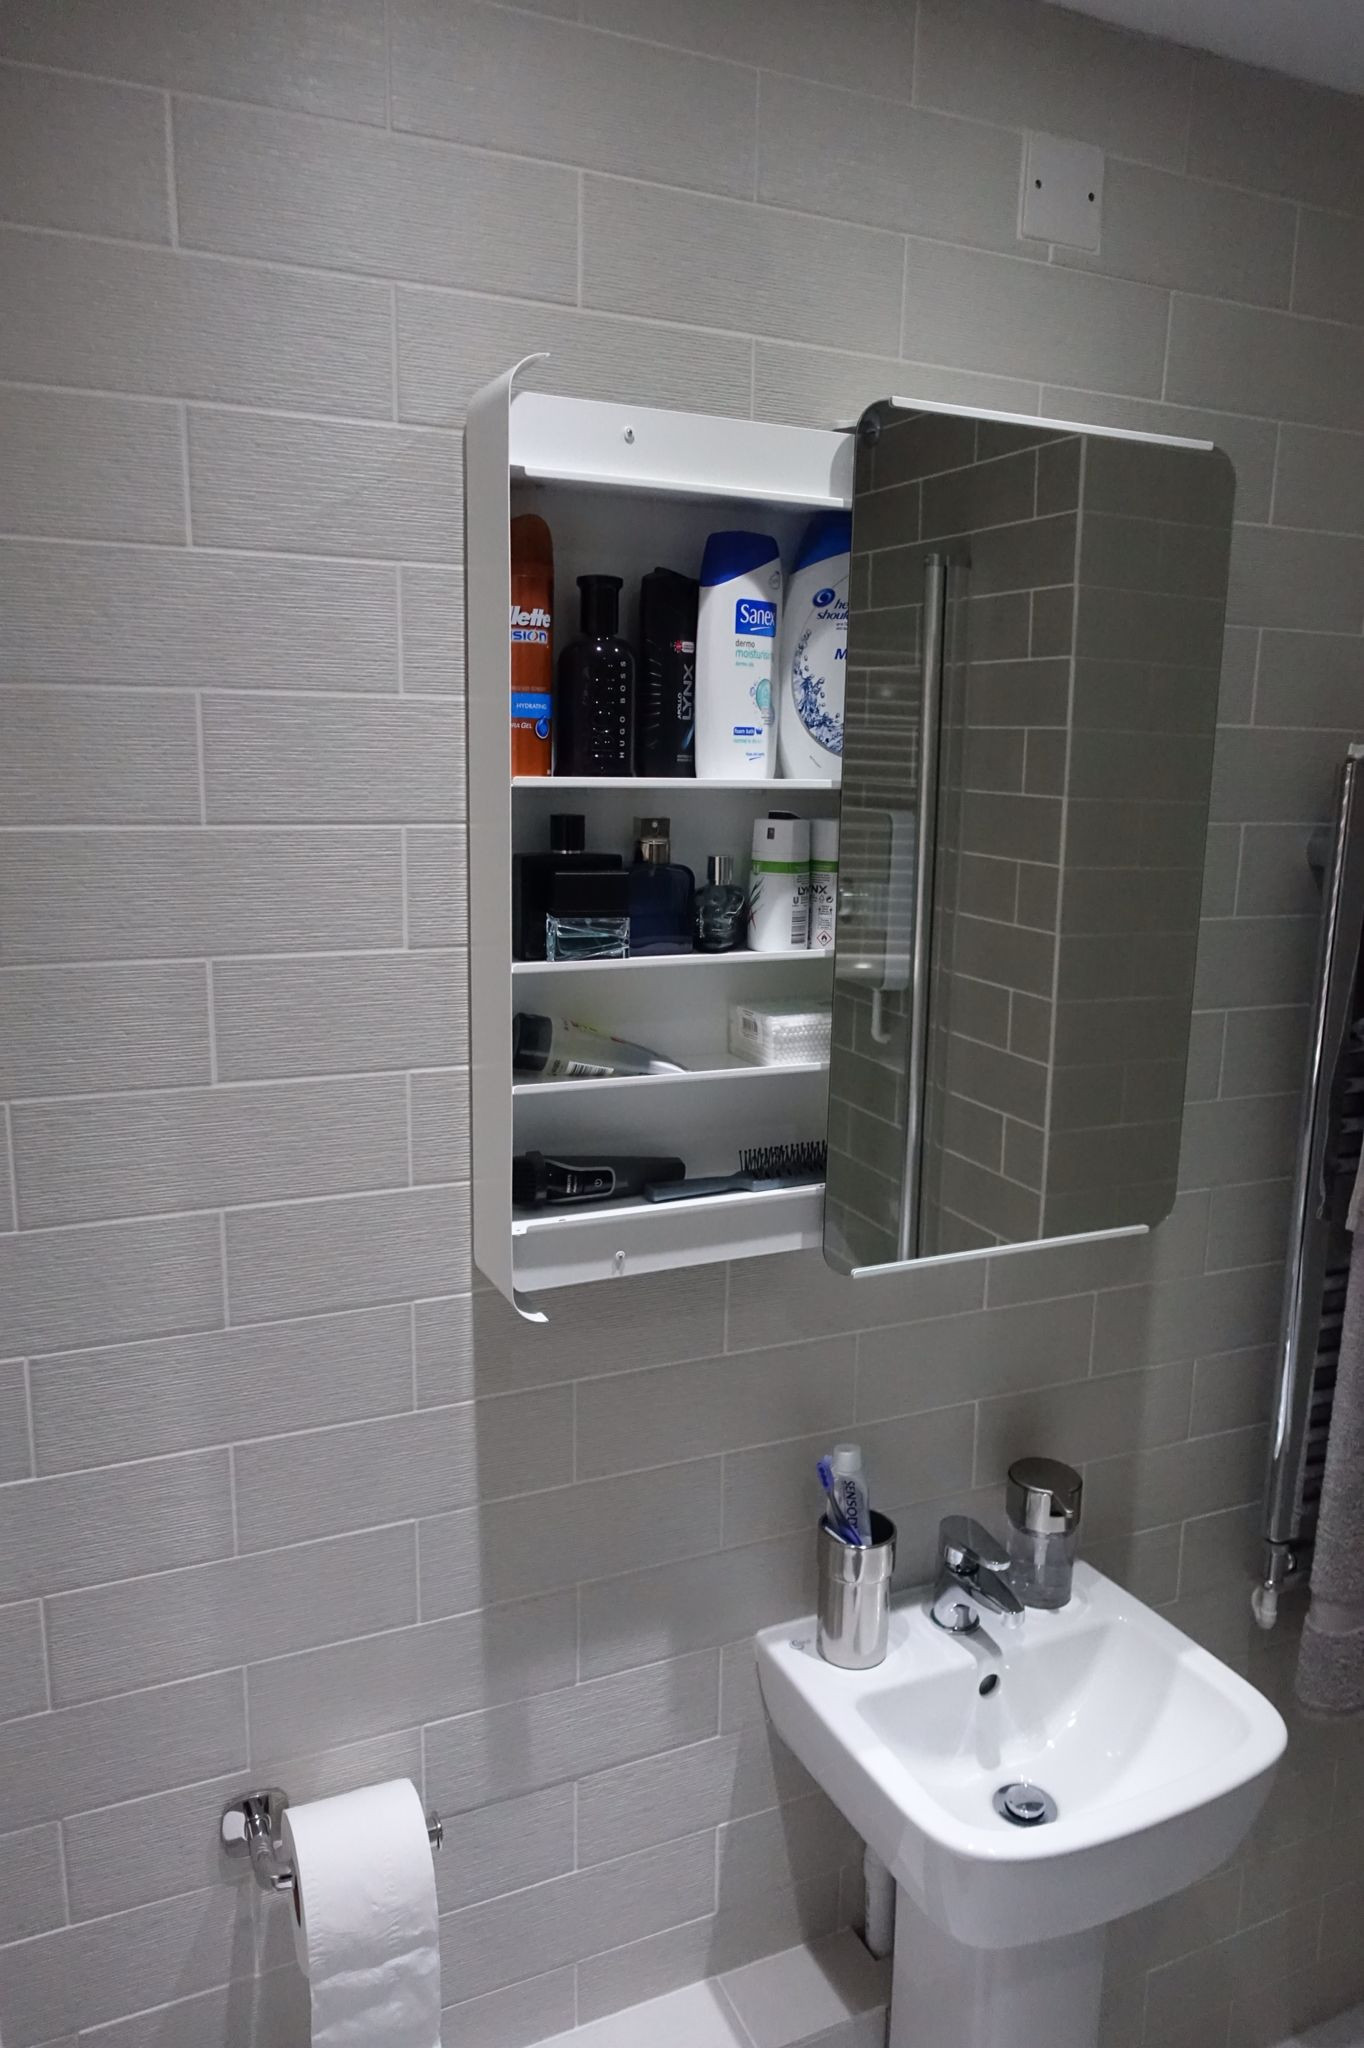 Ikea Bathroom Mirror Cabinet
 The bathroom cabinet was purchased from ikea Brickan